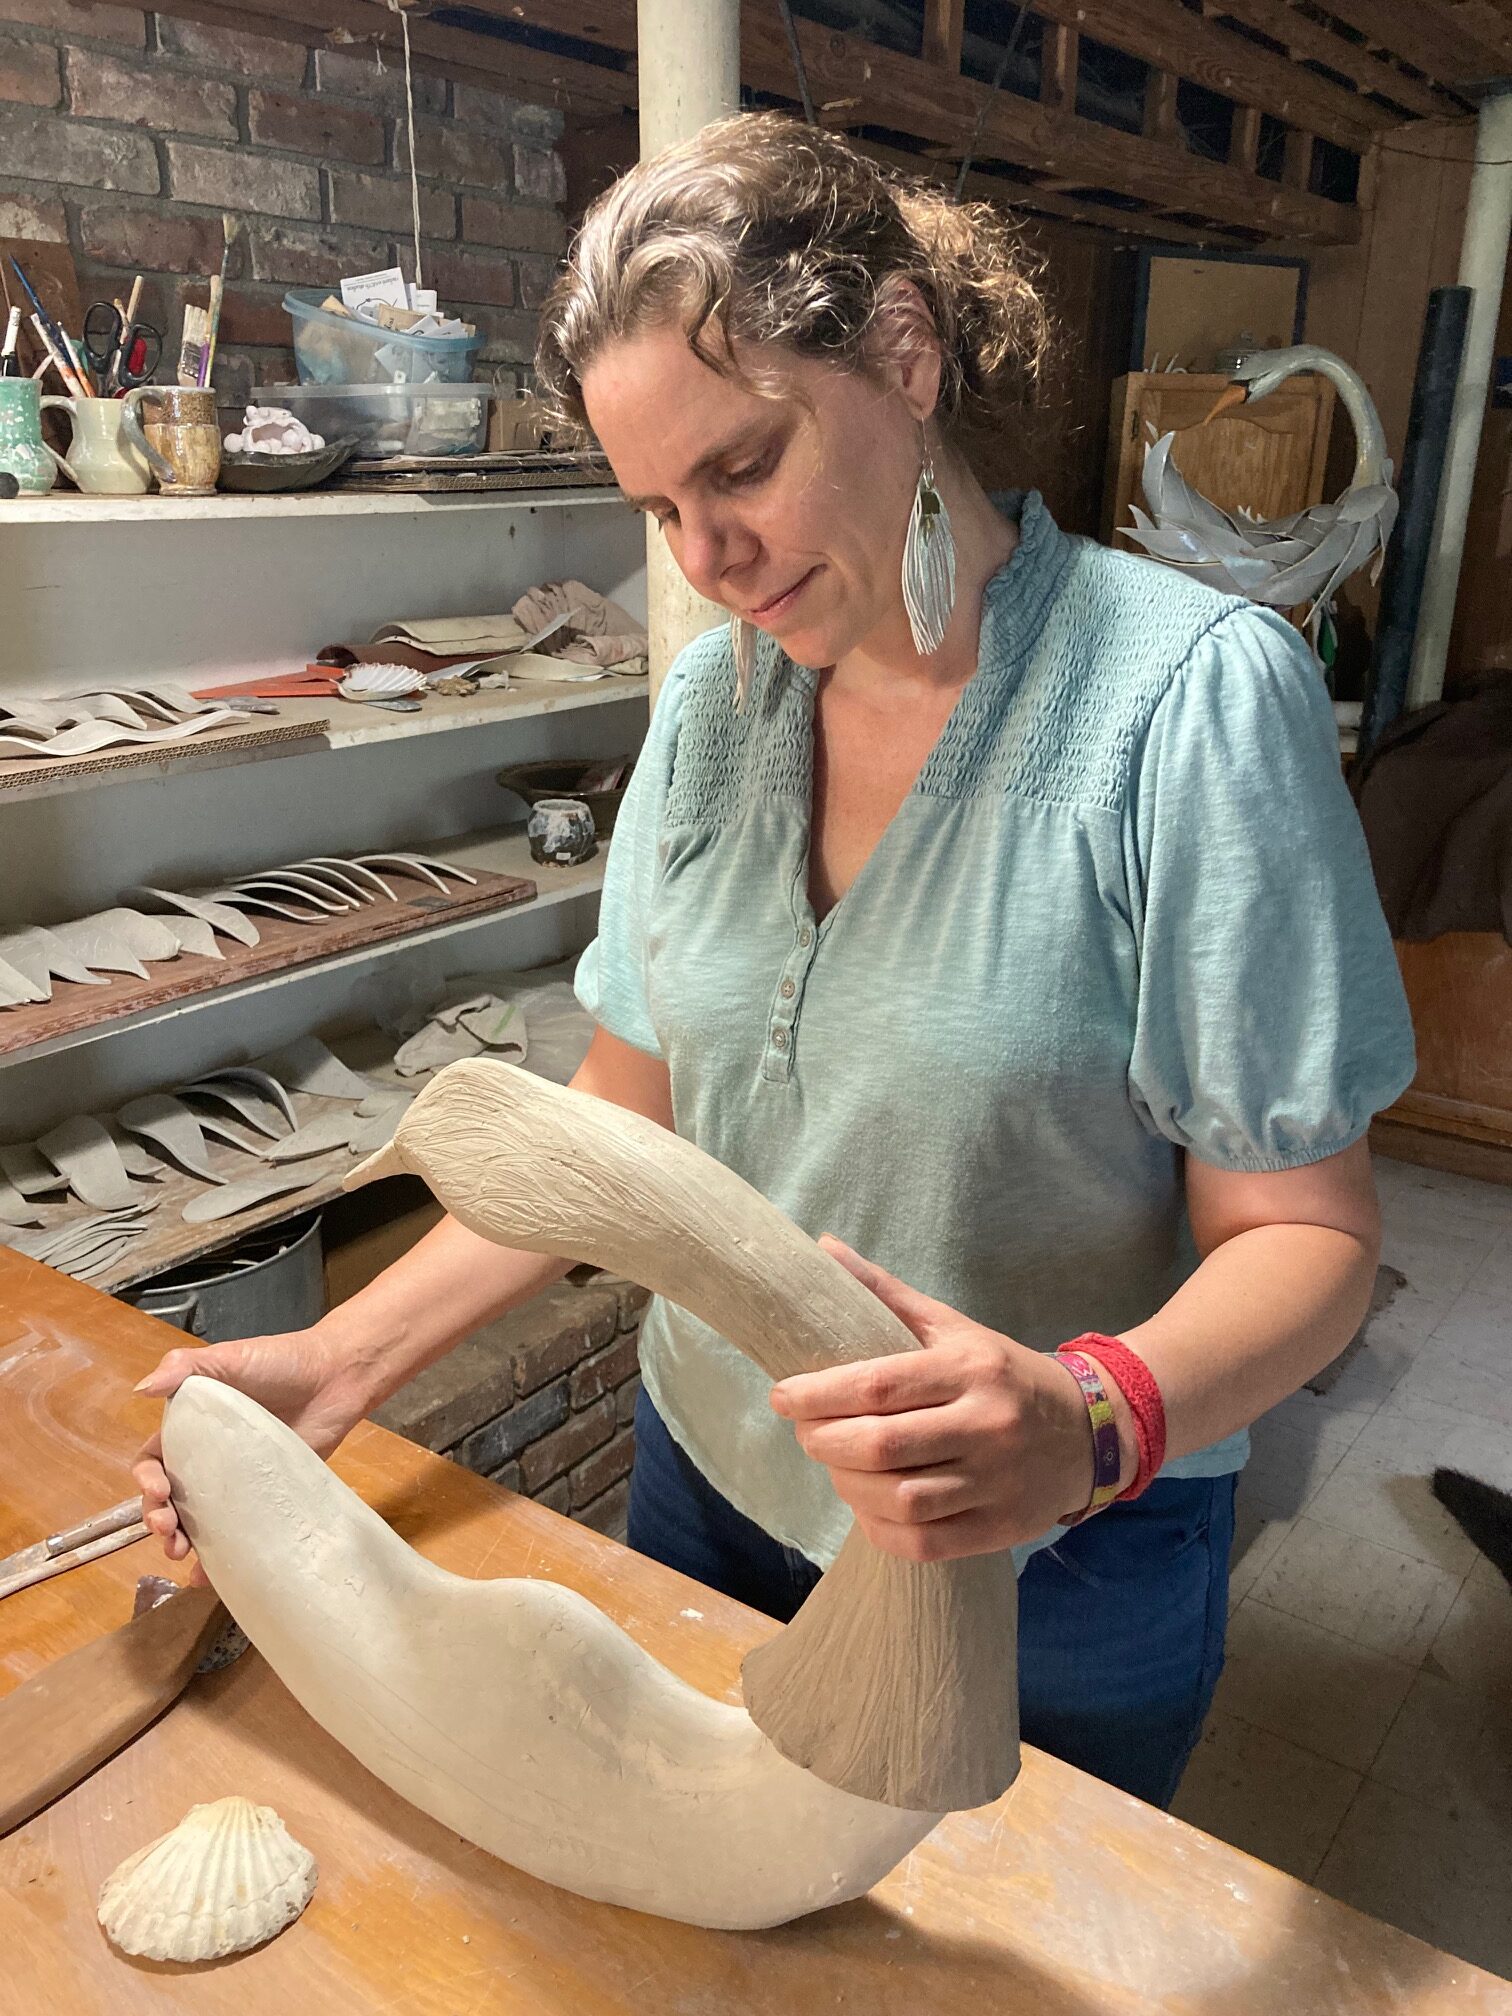 Image of Elizabeth sculpting a ceramic swan sculpture.